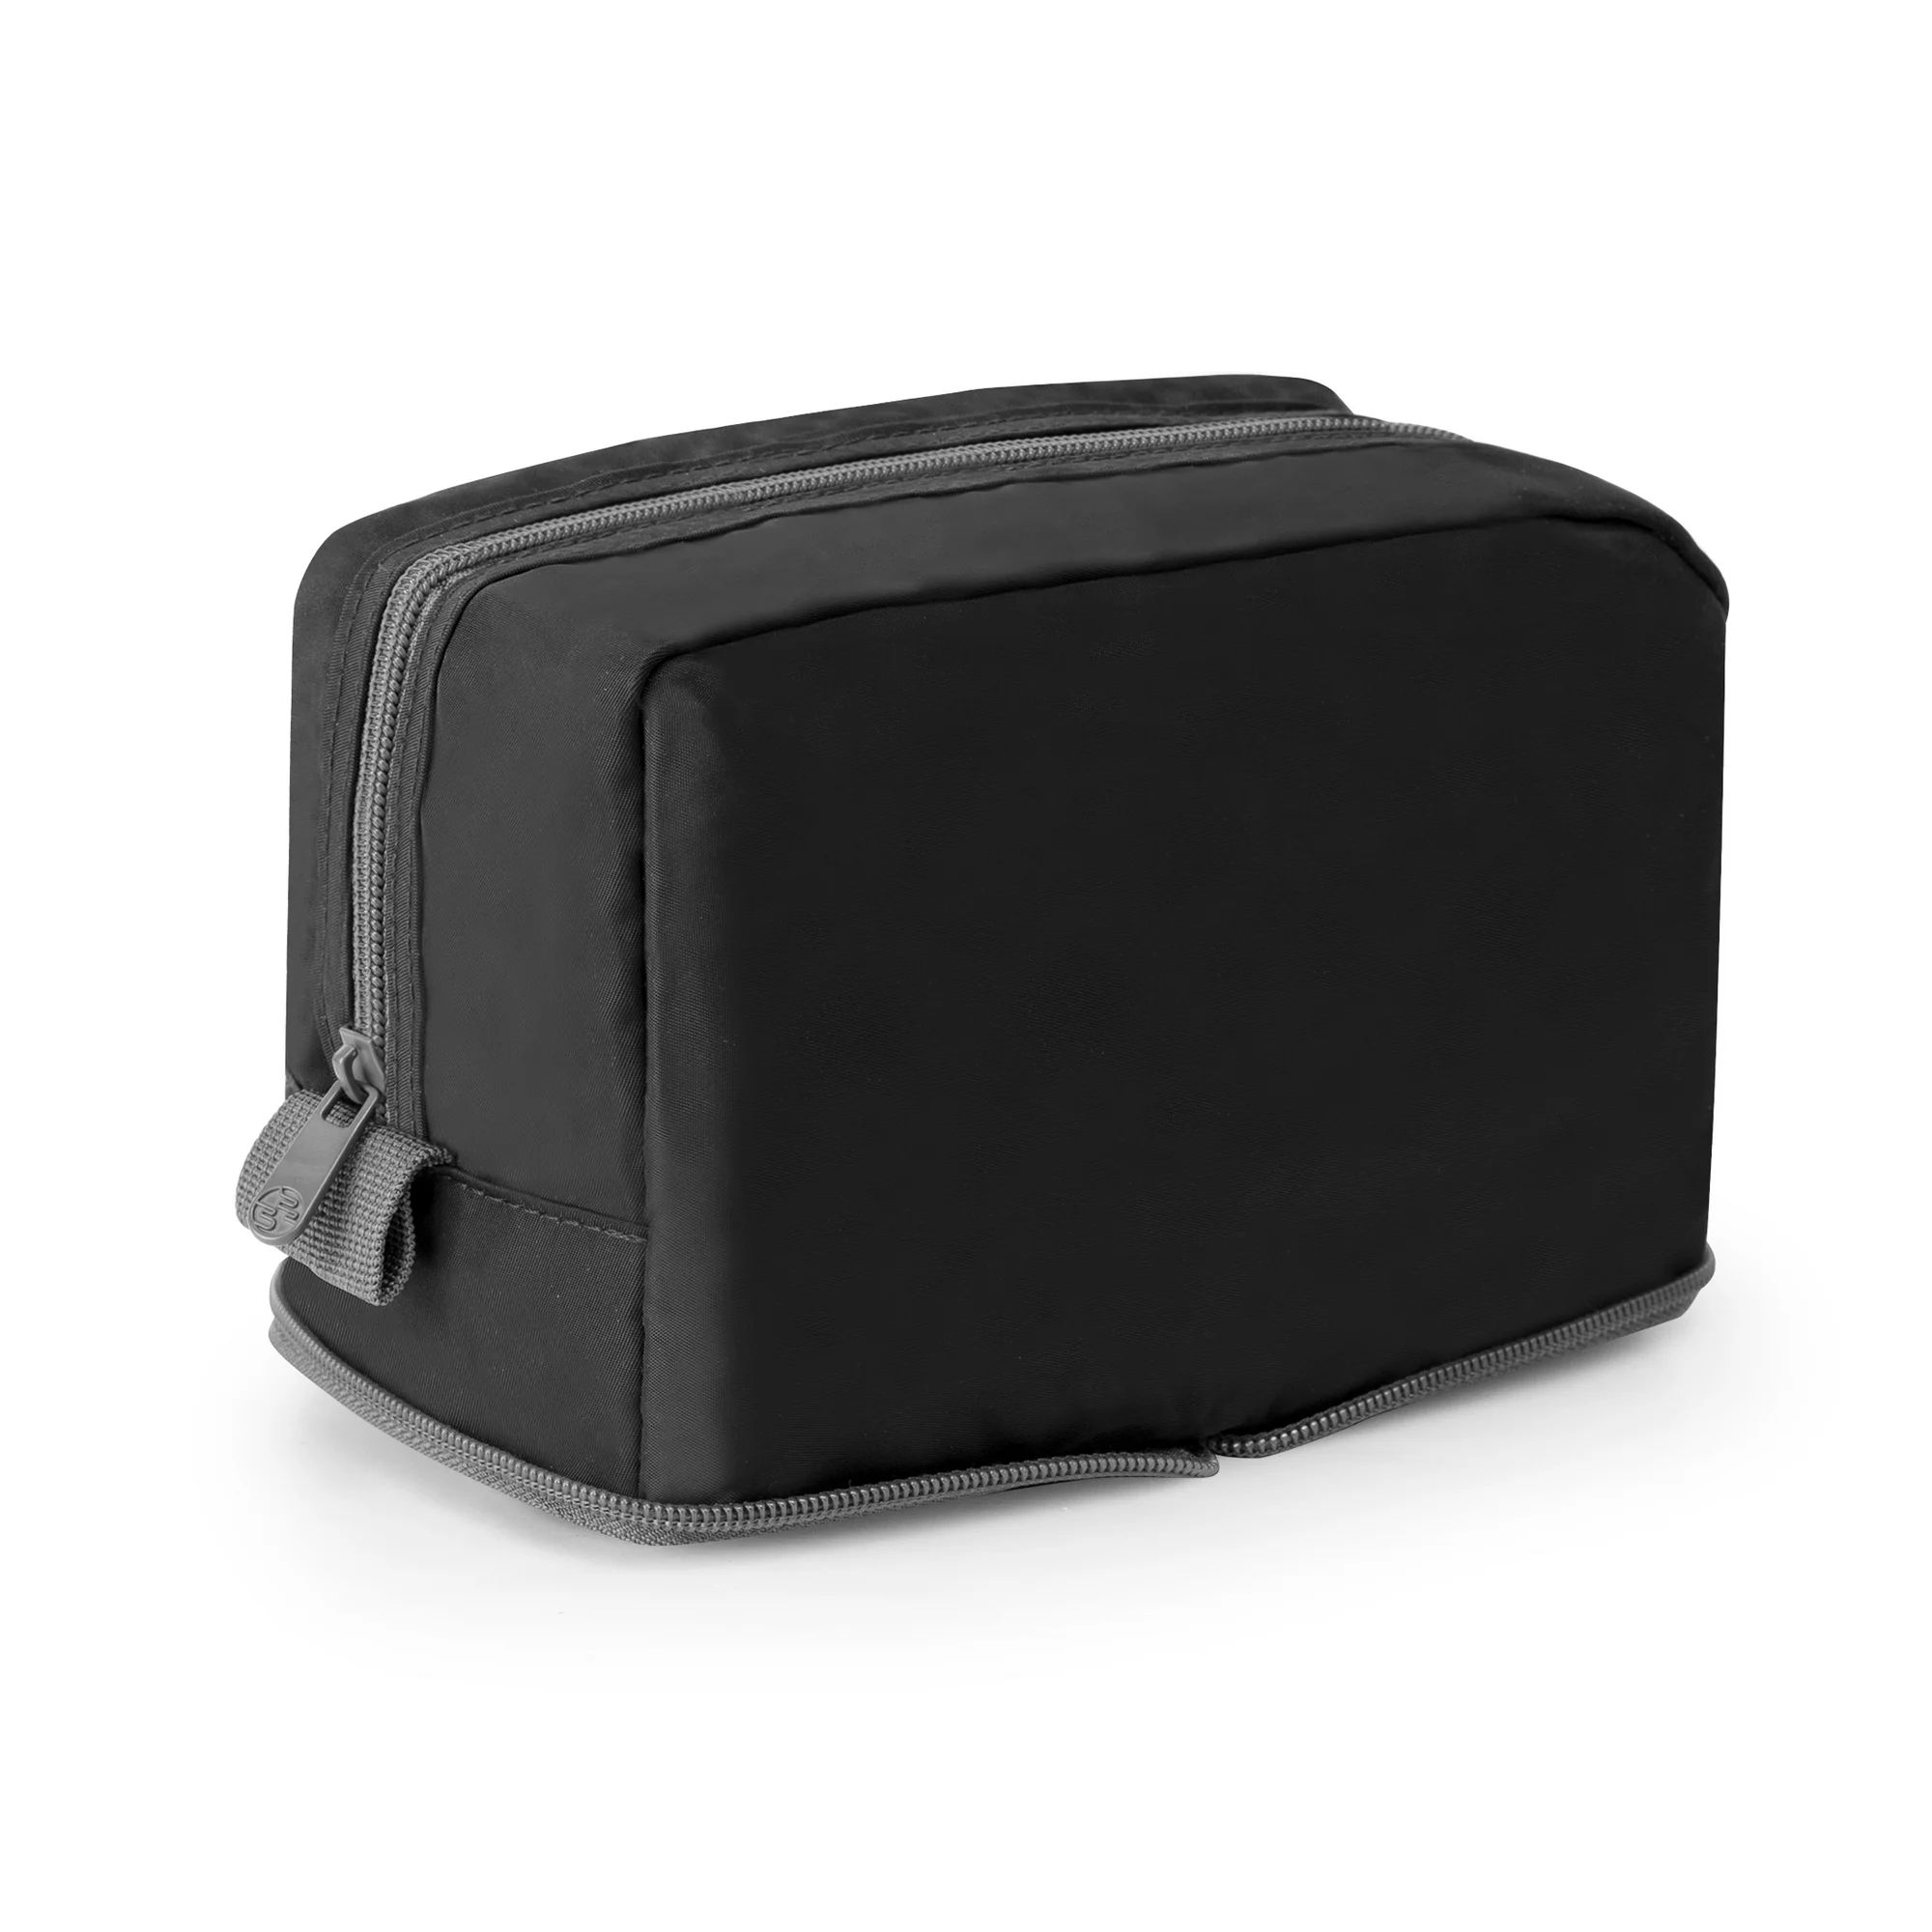 iFLY Packable Travel Toiletry Bag Black | Walmart (US)